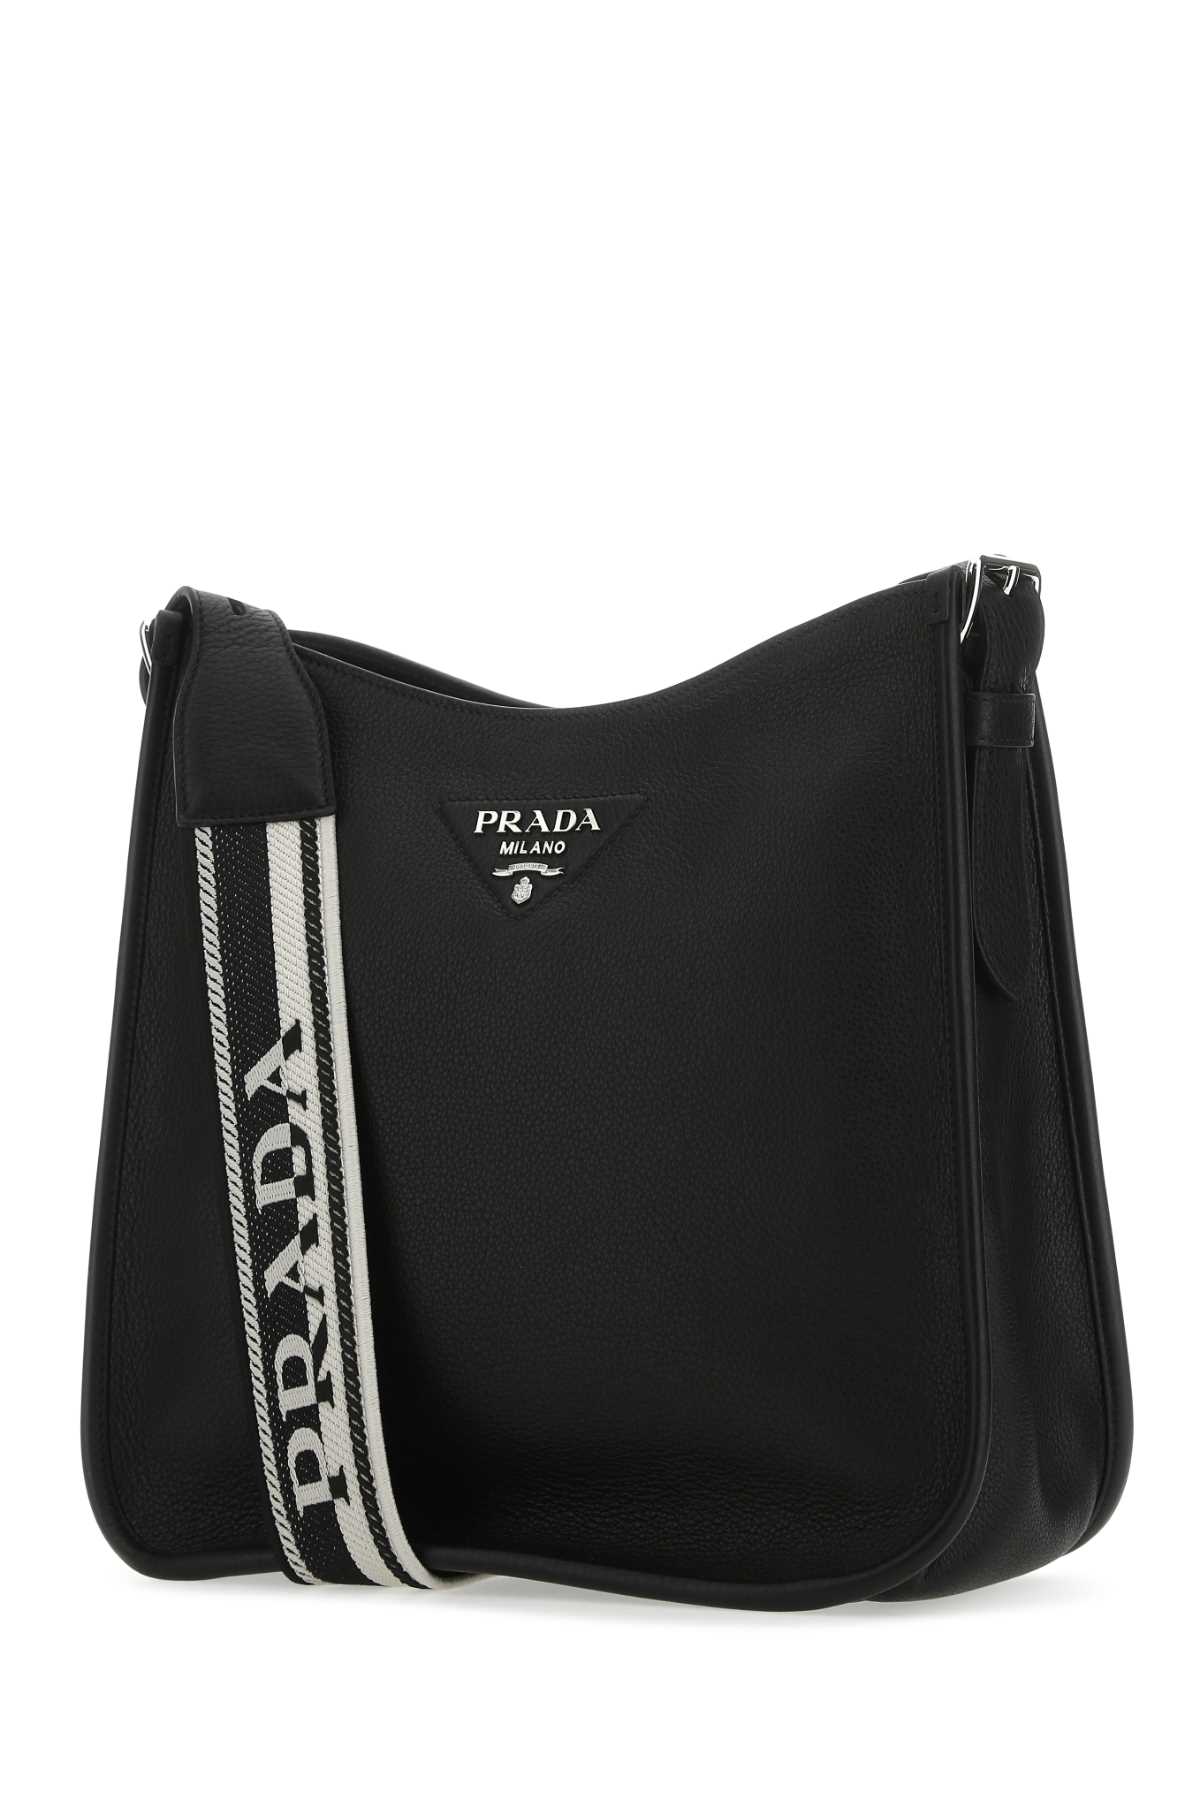 Shop Prada Black Leather Crossbody Bag